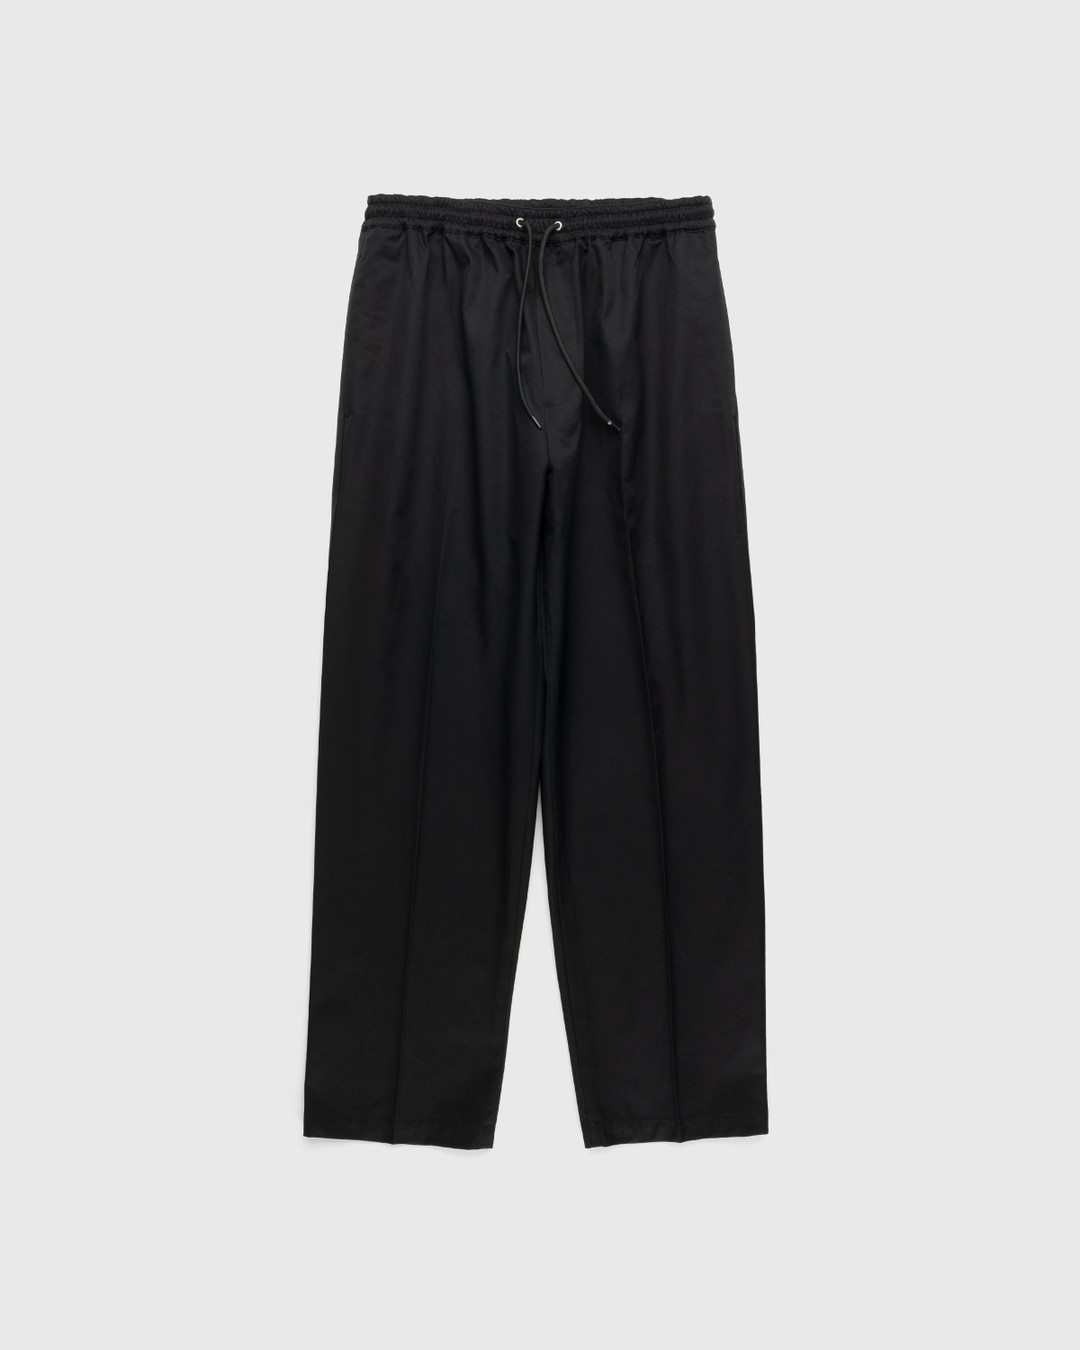 Highsnobiety – Cotton Nylon Elastic Pants Black - Trousers - Black - Image 1